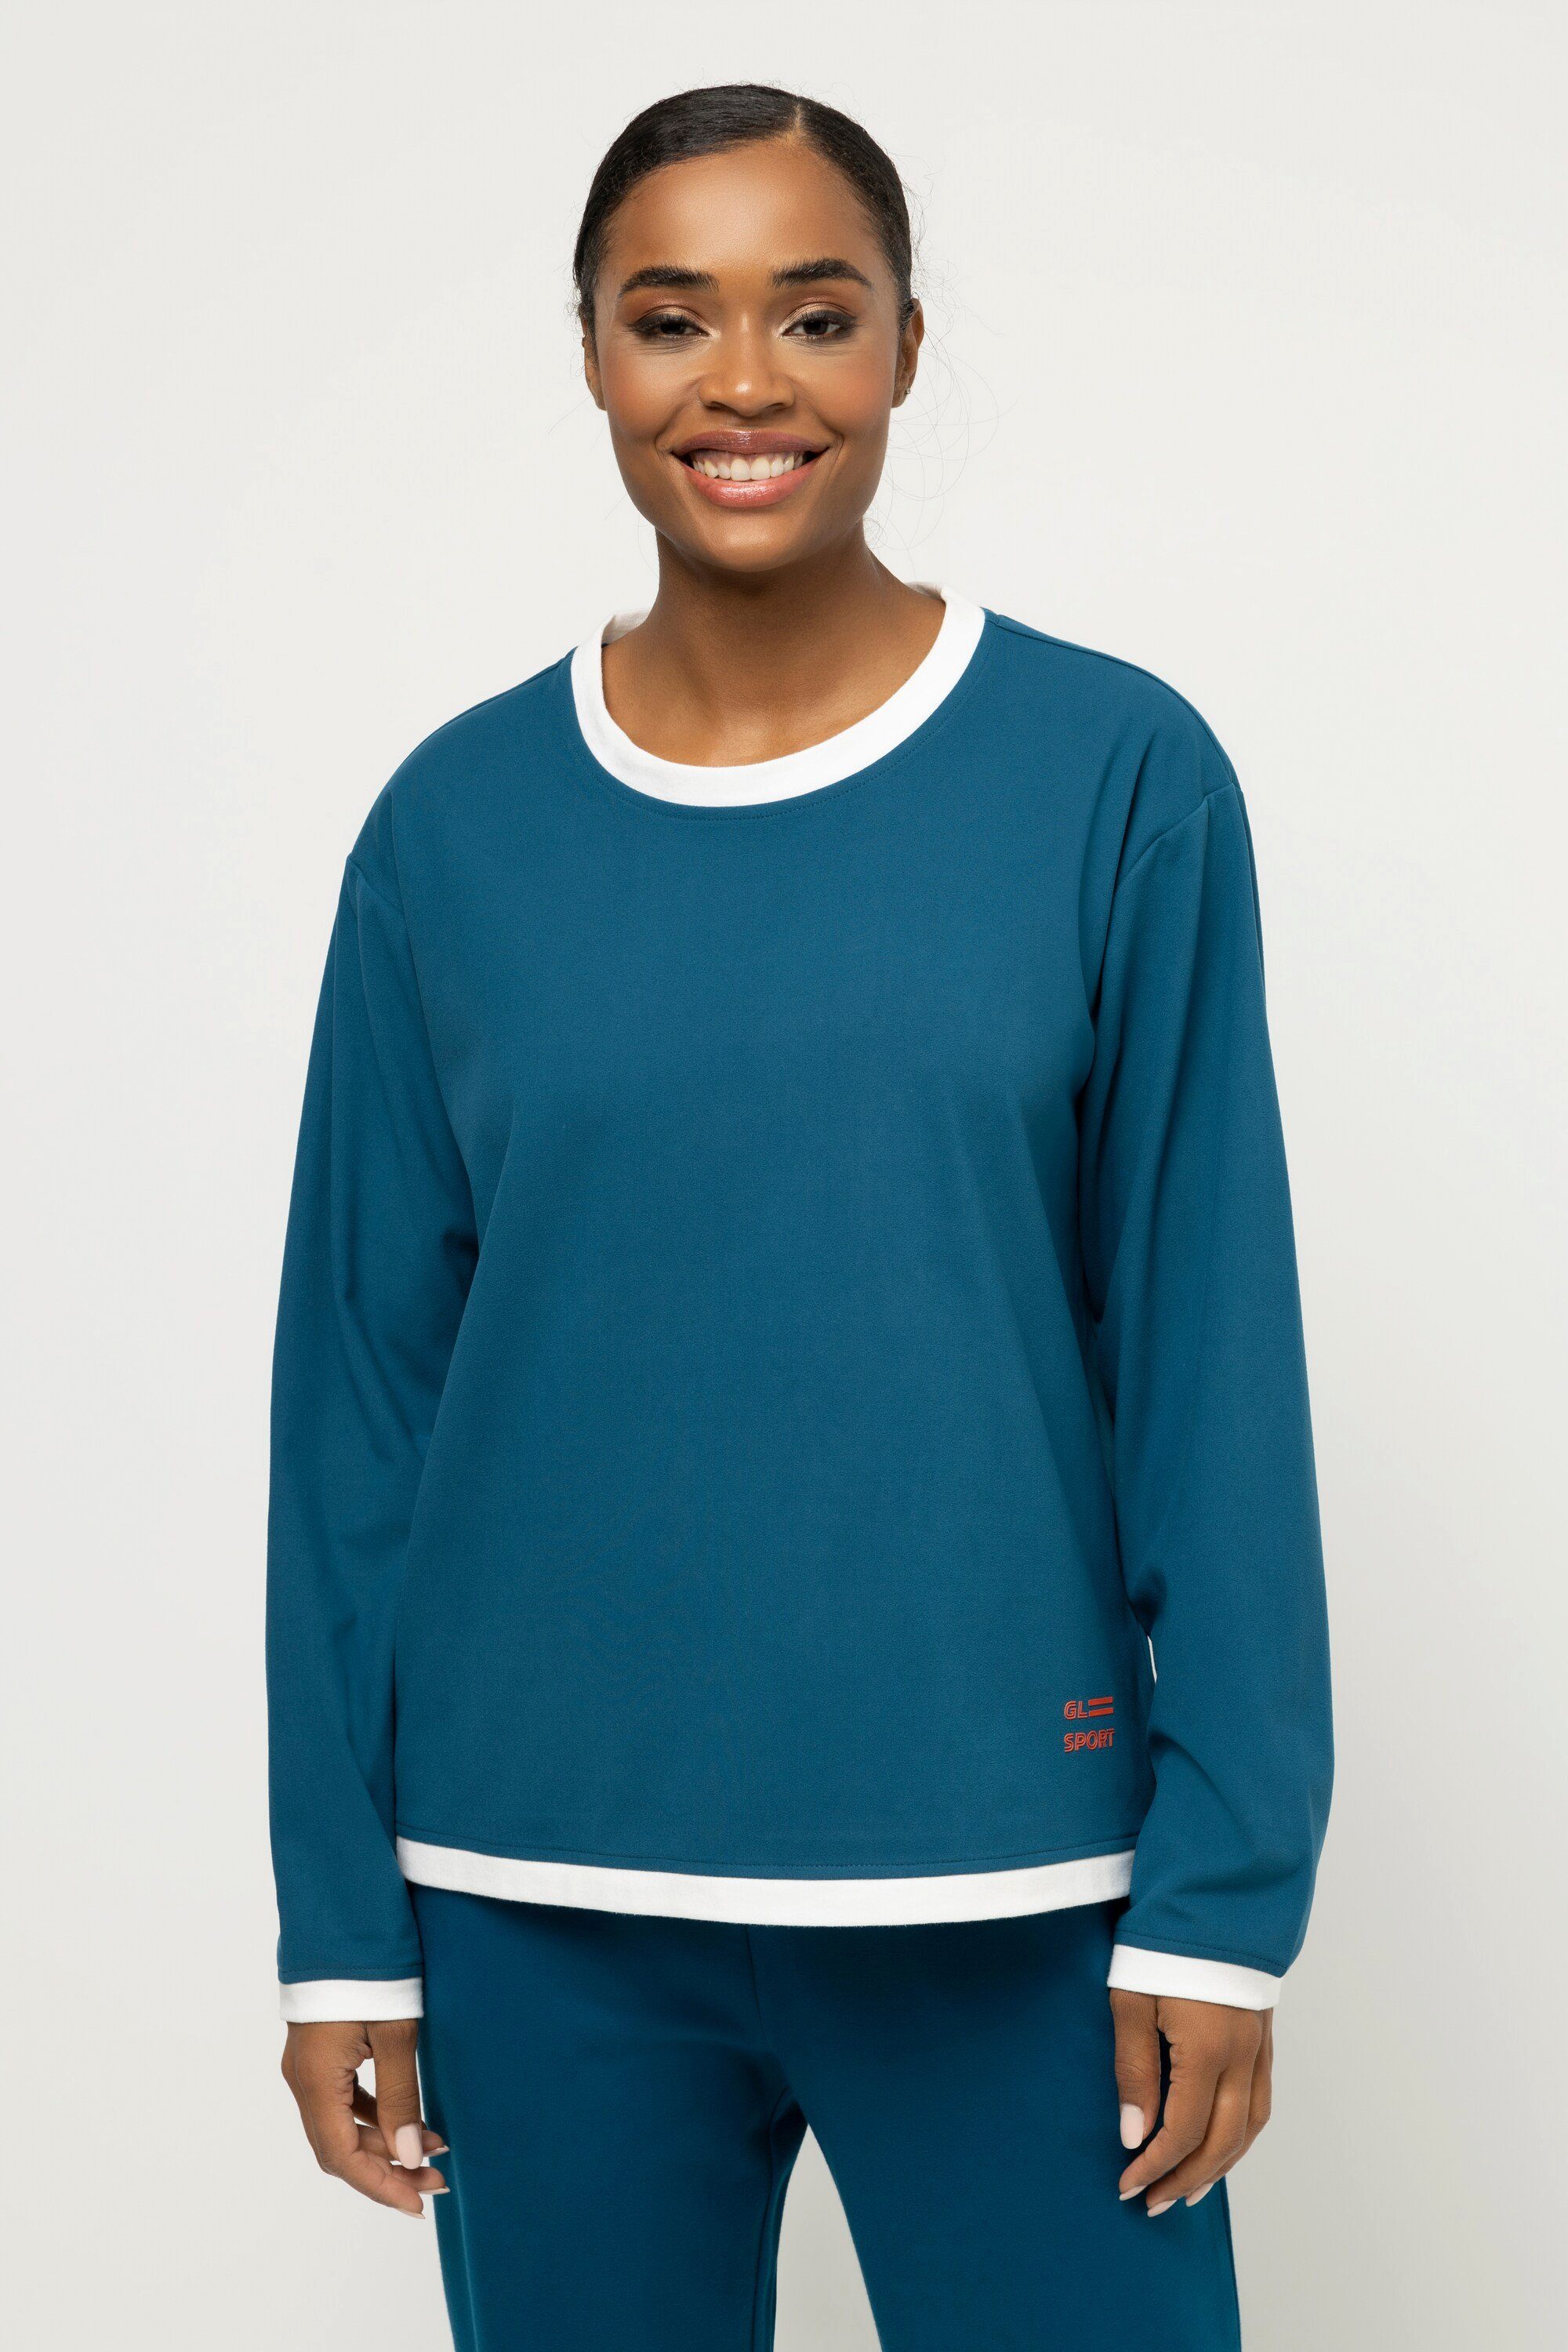 Gina Laura Longshirt T-Shirt Farb-Kontraste Rundhals Langarm blaugrün